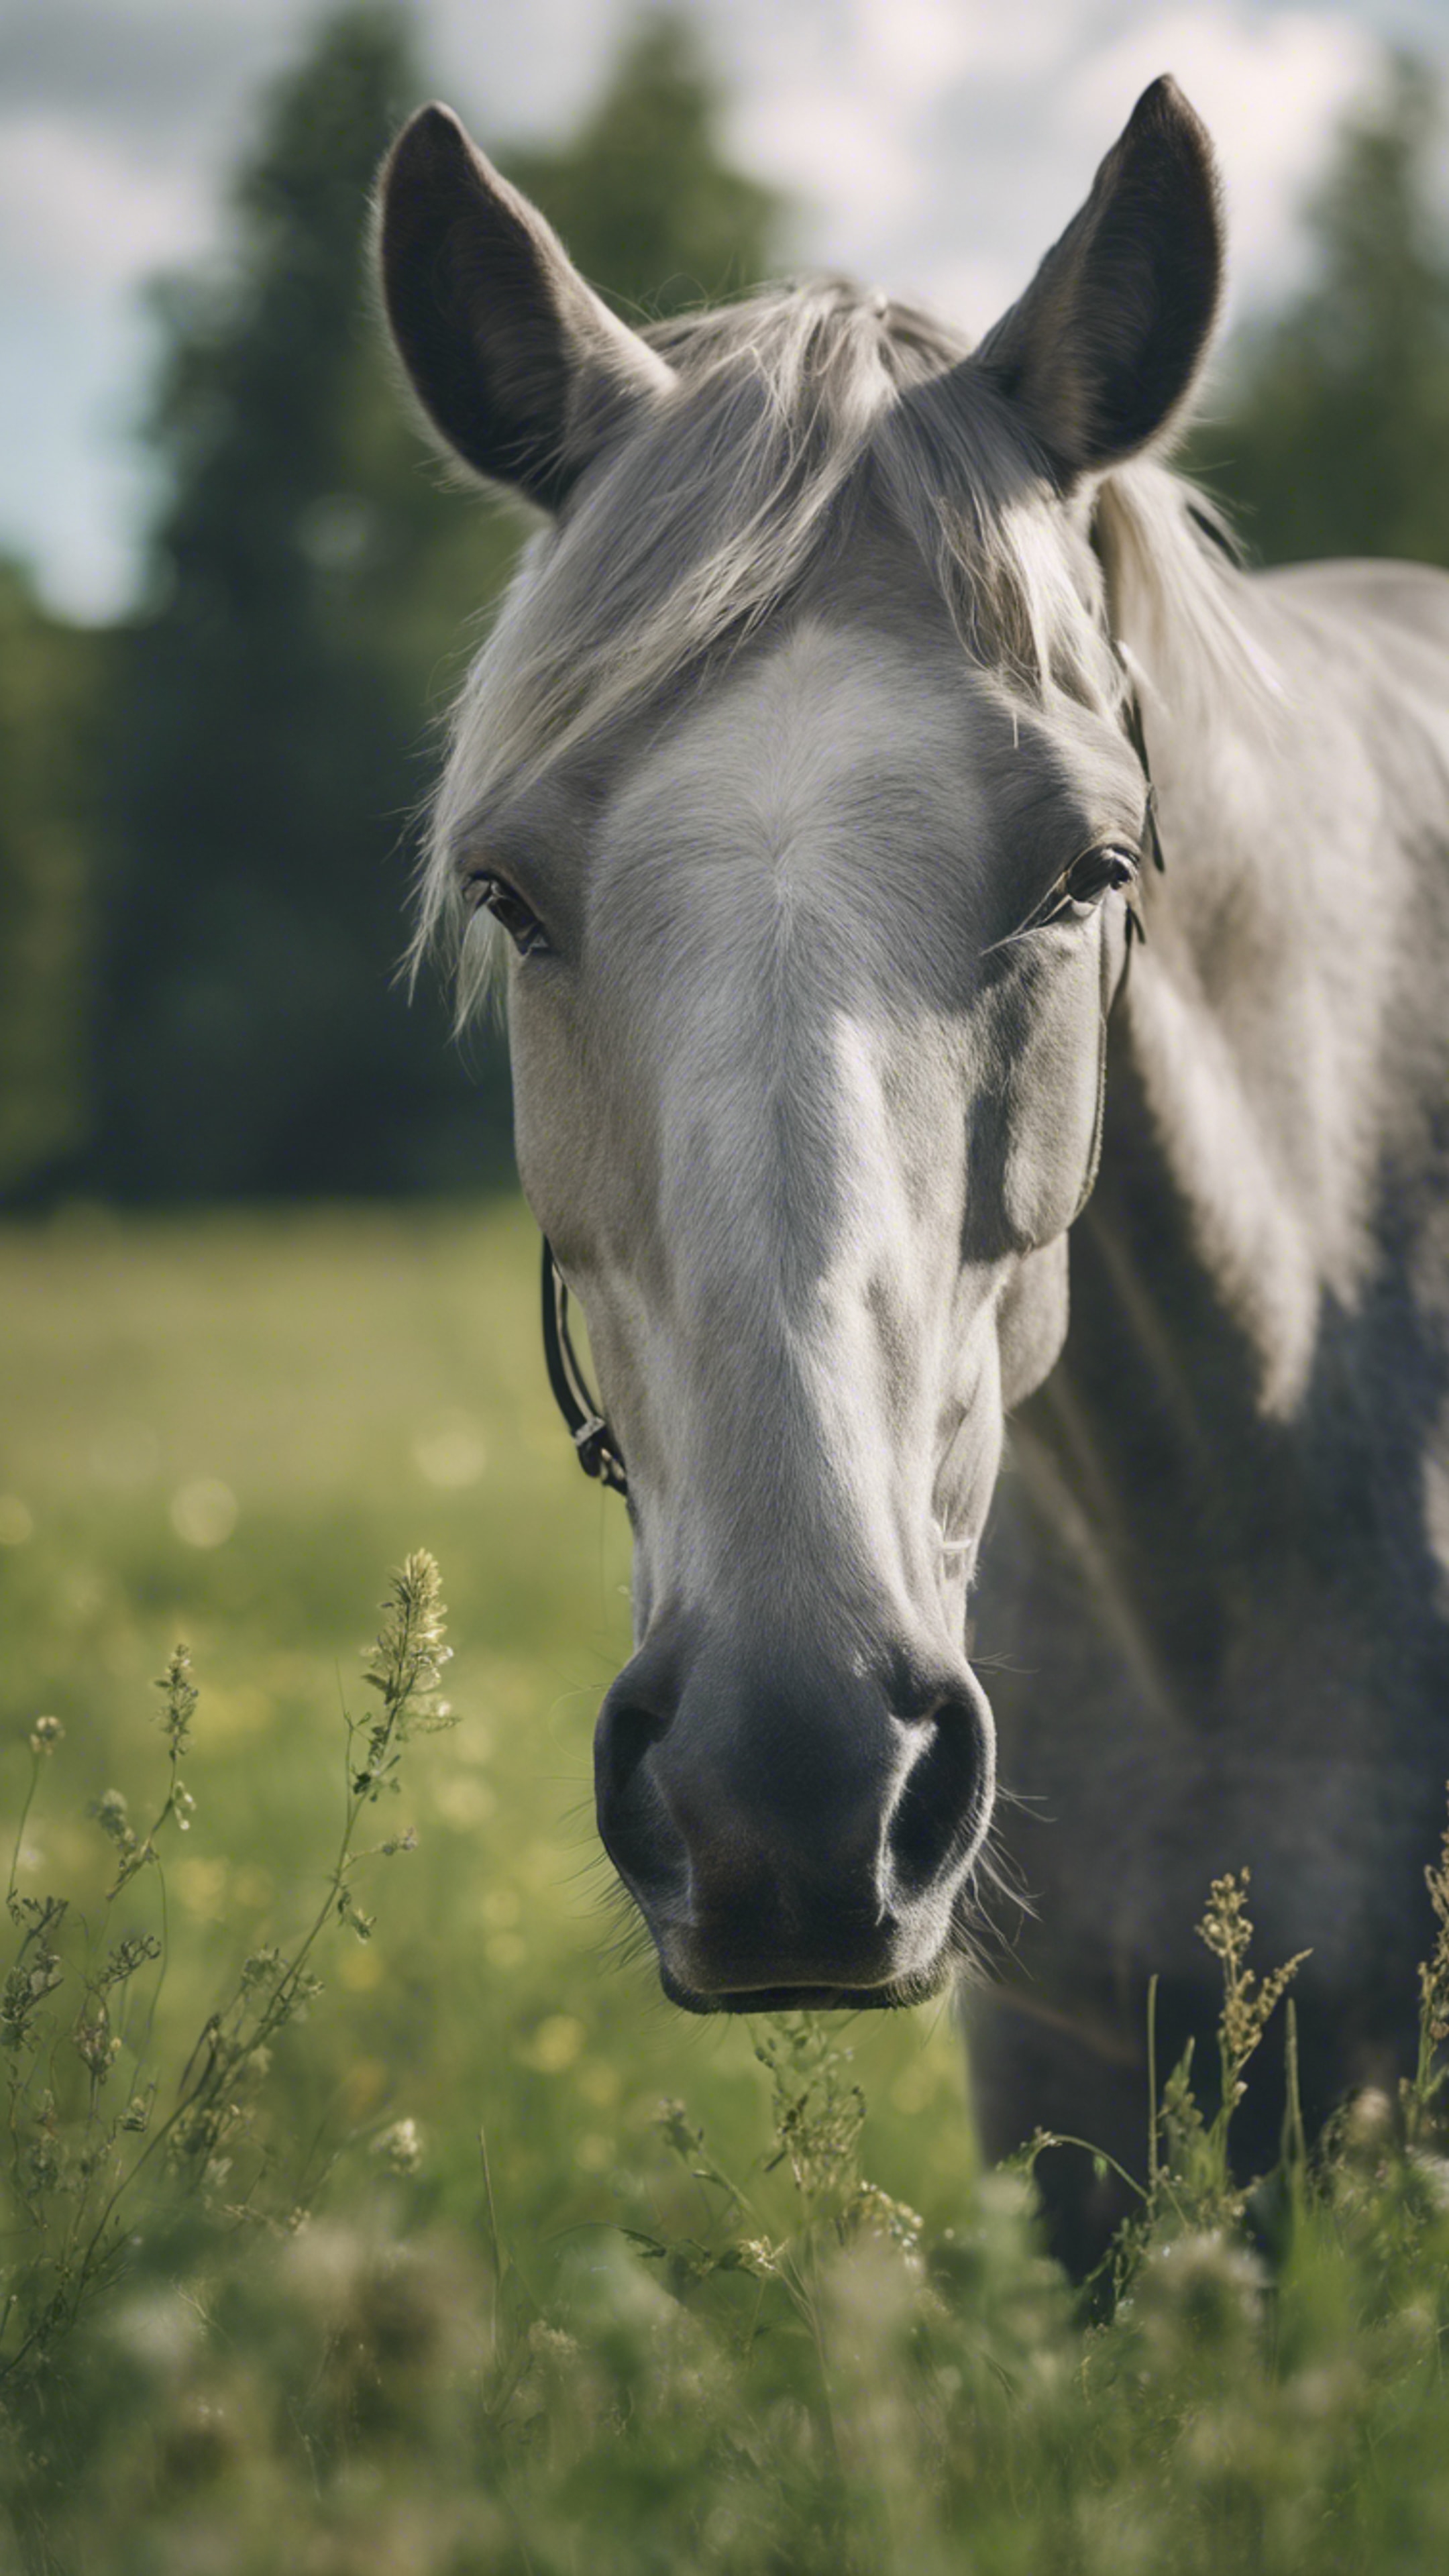 A calm grey quarter horse grazing freely in a green meadow under a cloudy sky. Wallpaper[ae89d2cd692c4a6c9aea]